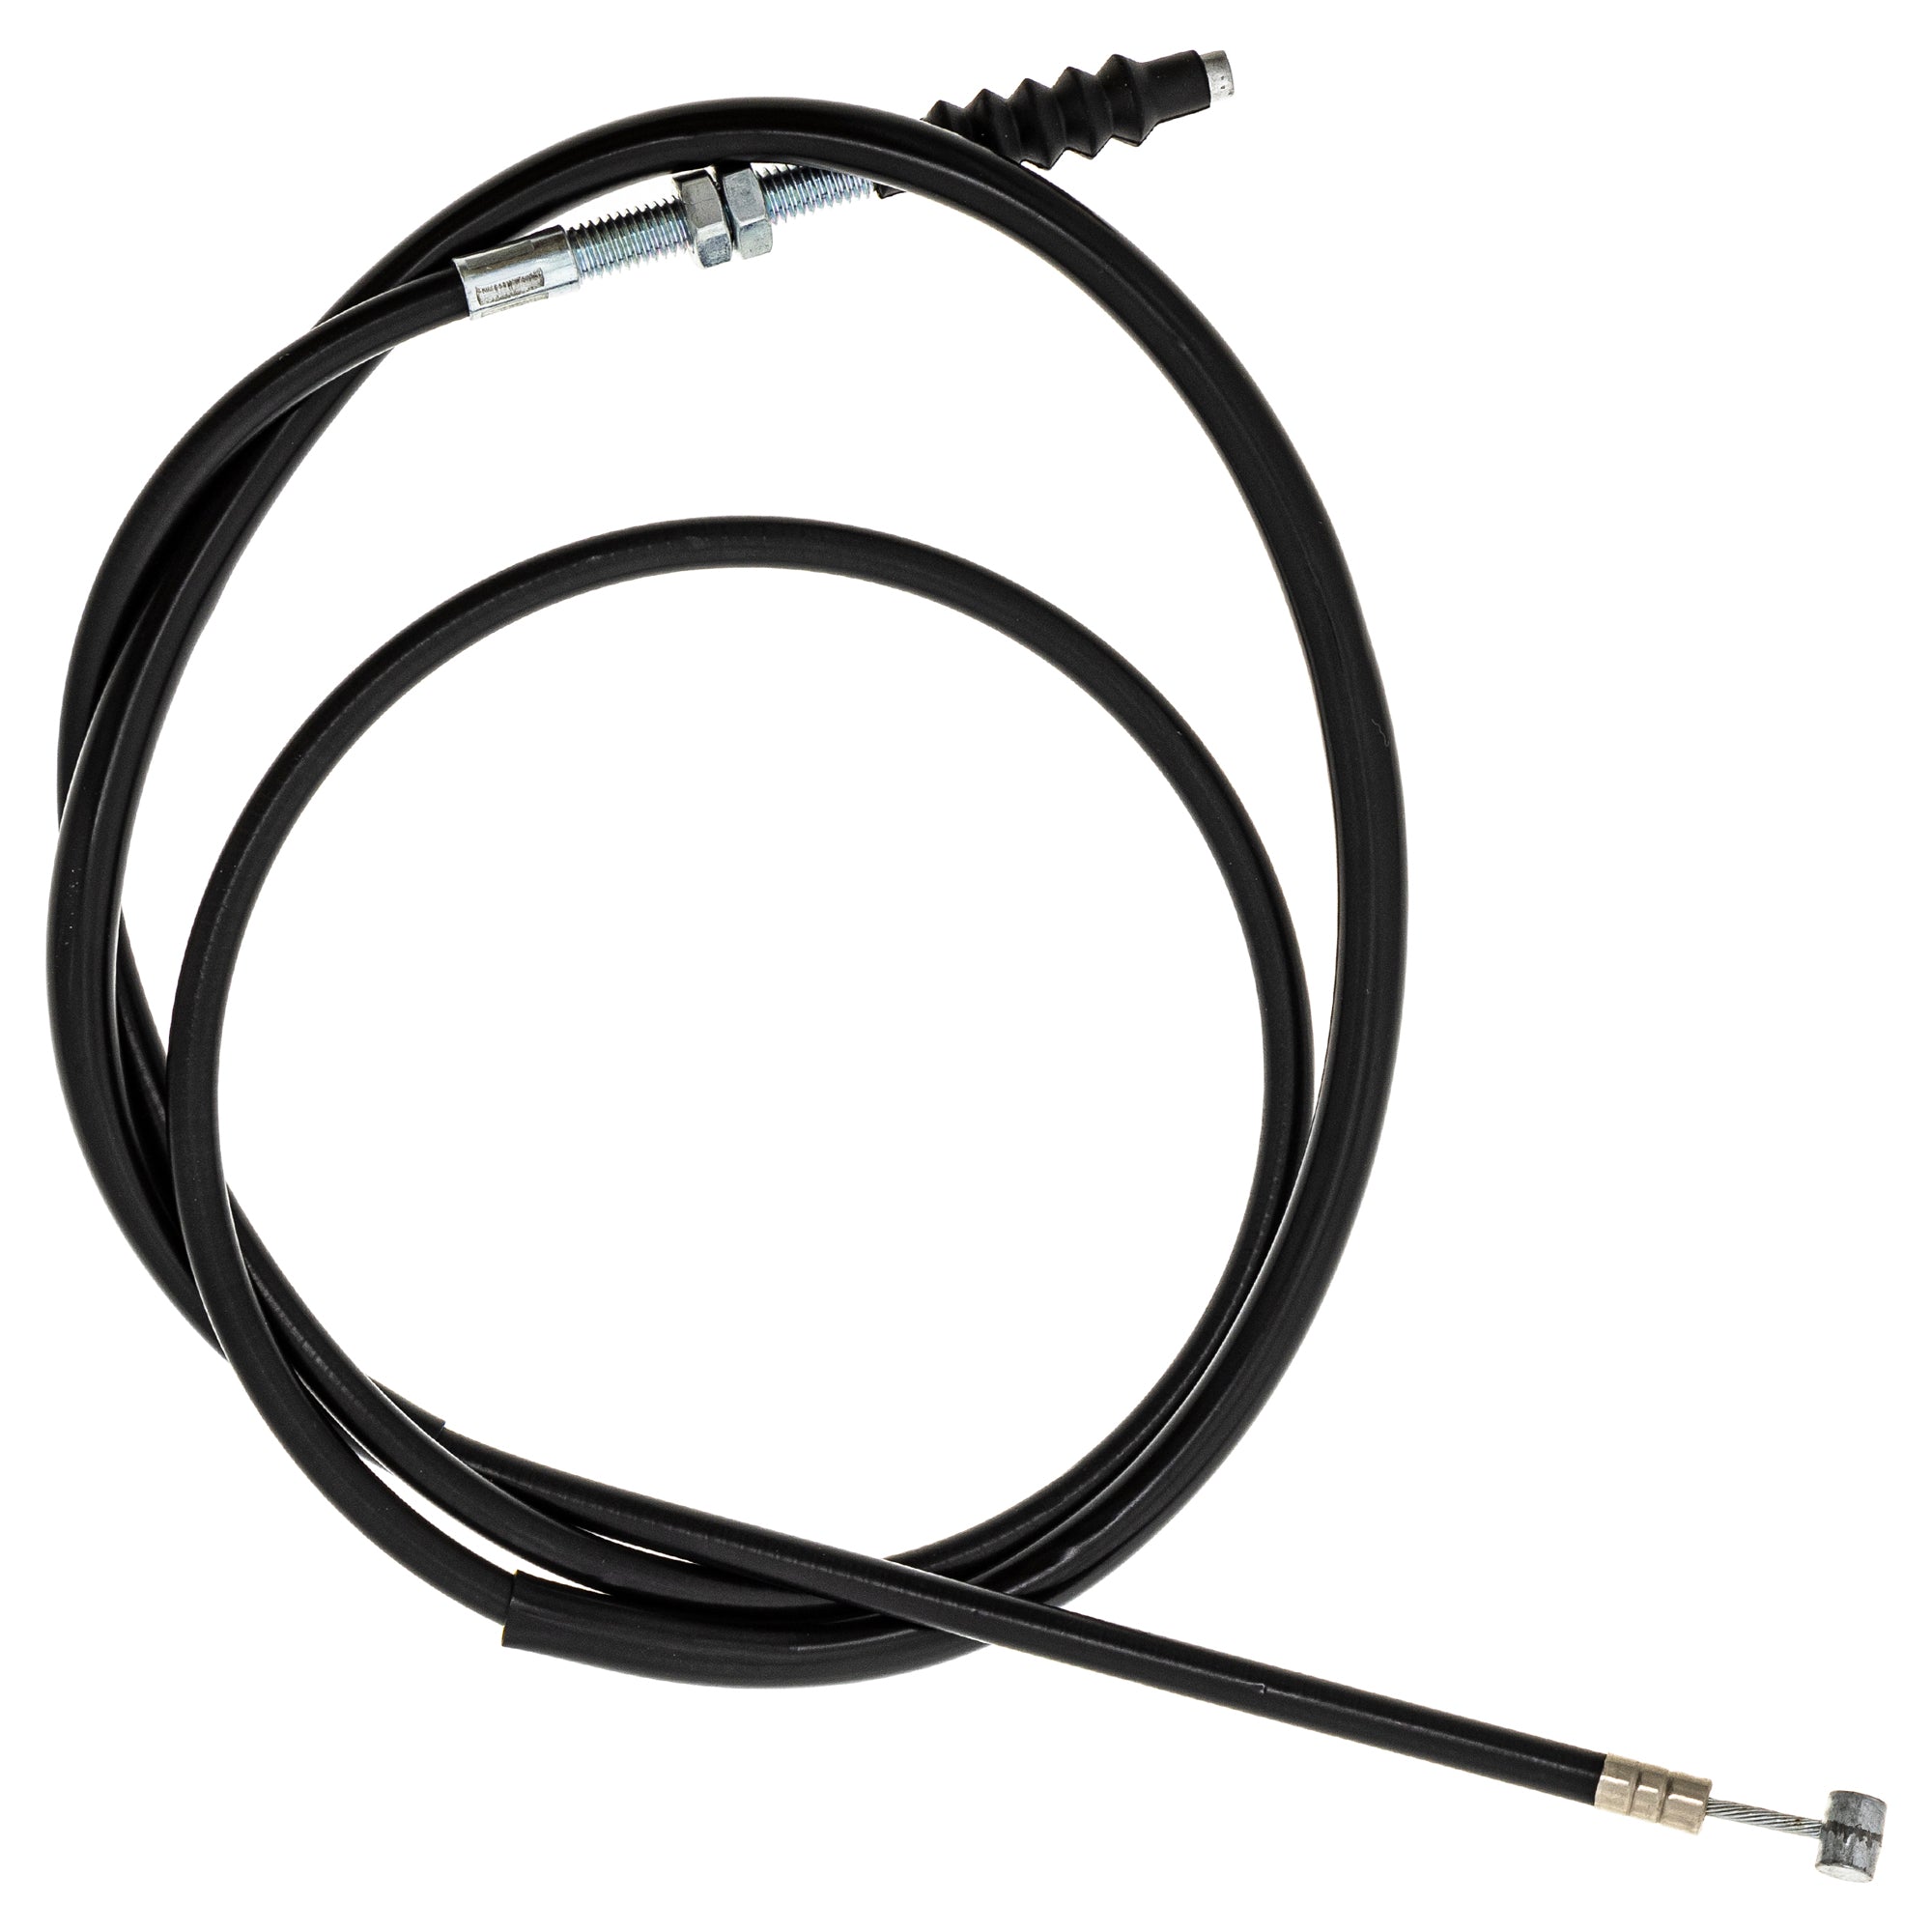 Clutch Cable for zOTHER Super Nighthawk Custom CB750 NICHE 519-CCB2259L